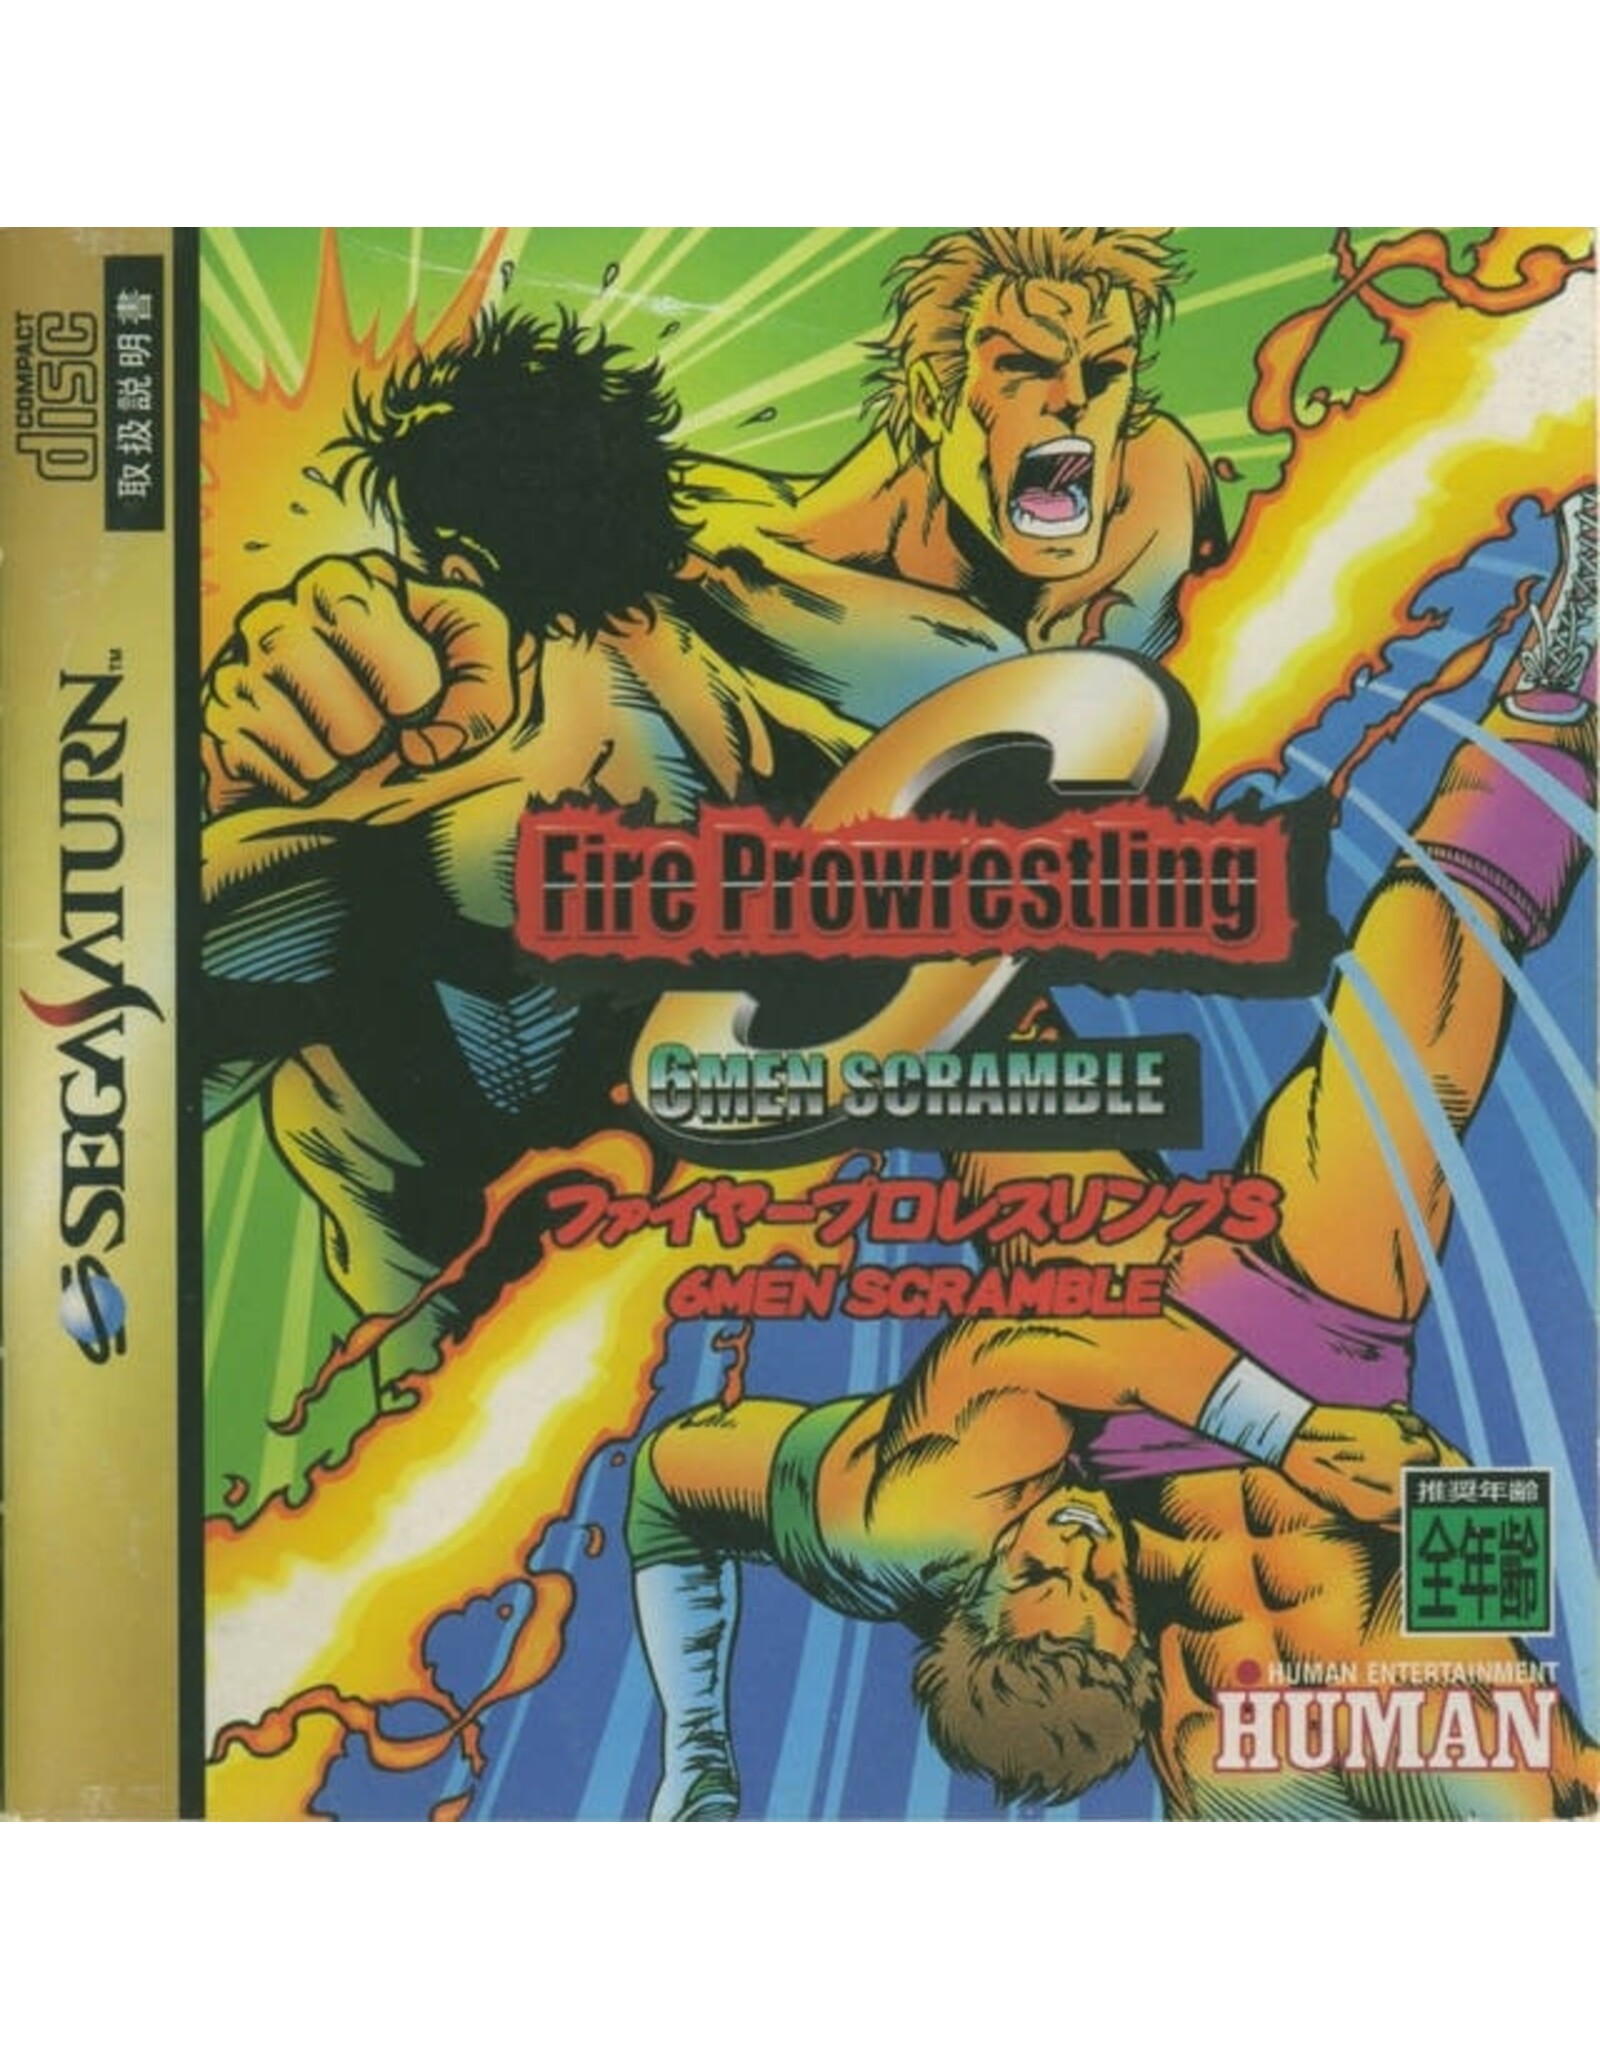 Sega Saturn Fire Prowrestling 6 Men Scramble - JP Import (Used)